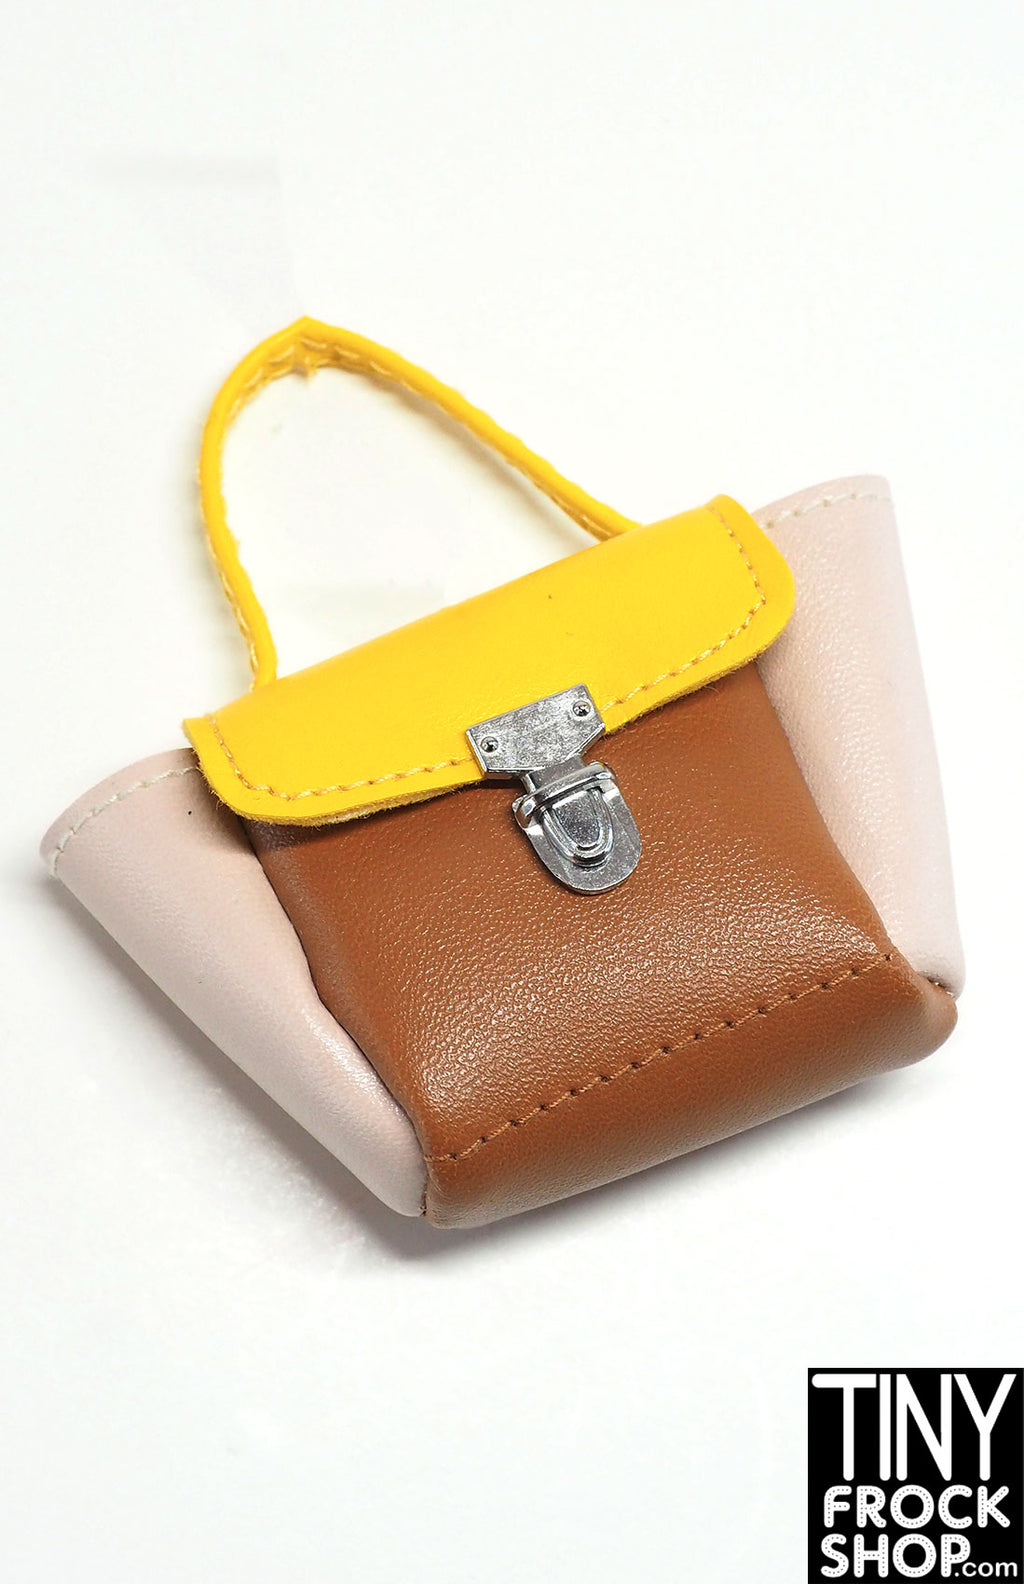 Tiny Frock Shop Zuru Mini Brands Fashion RARE Metallic Gold Bag Series 1